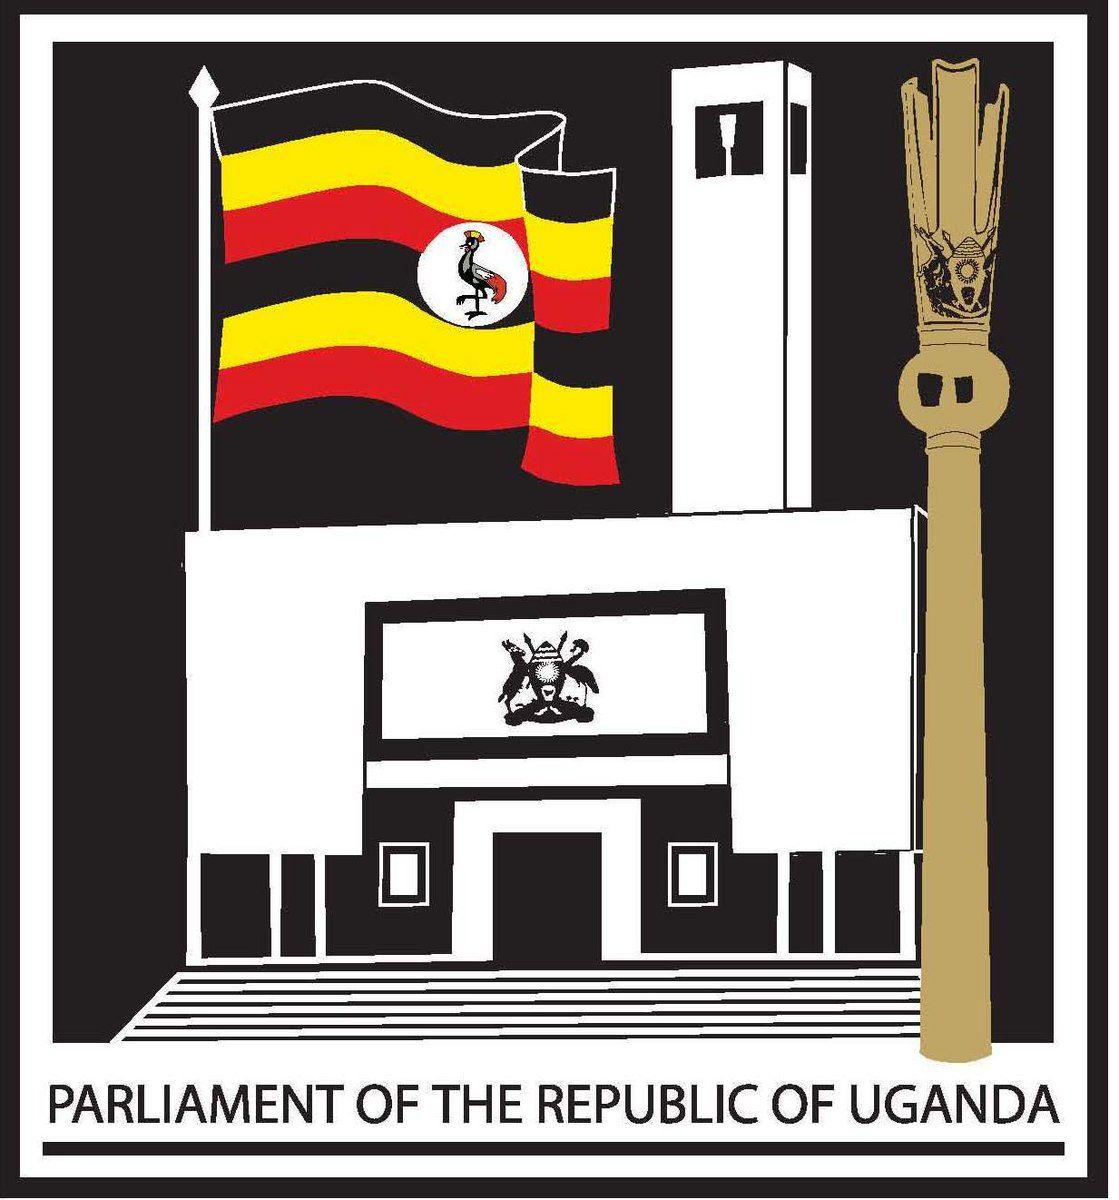 Parliament Logo - Parliament to change logo